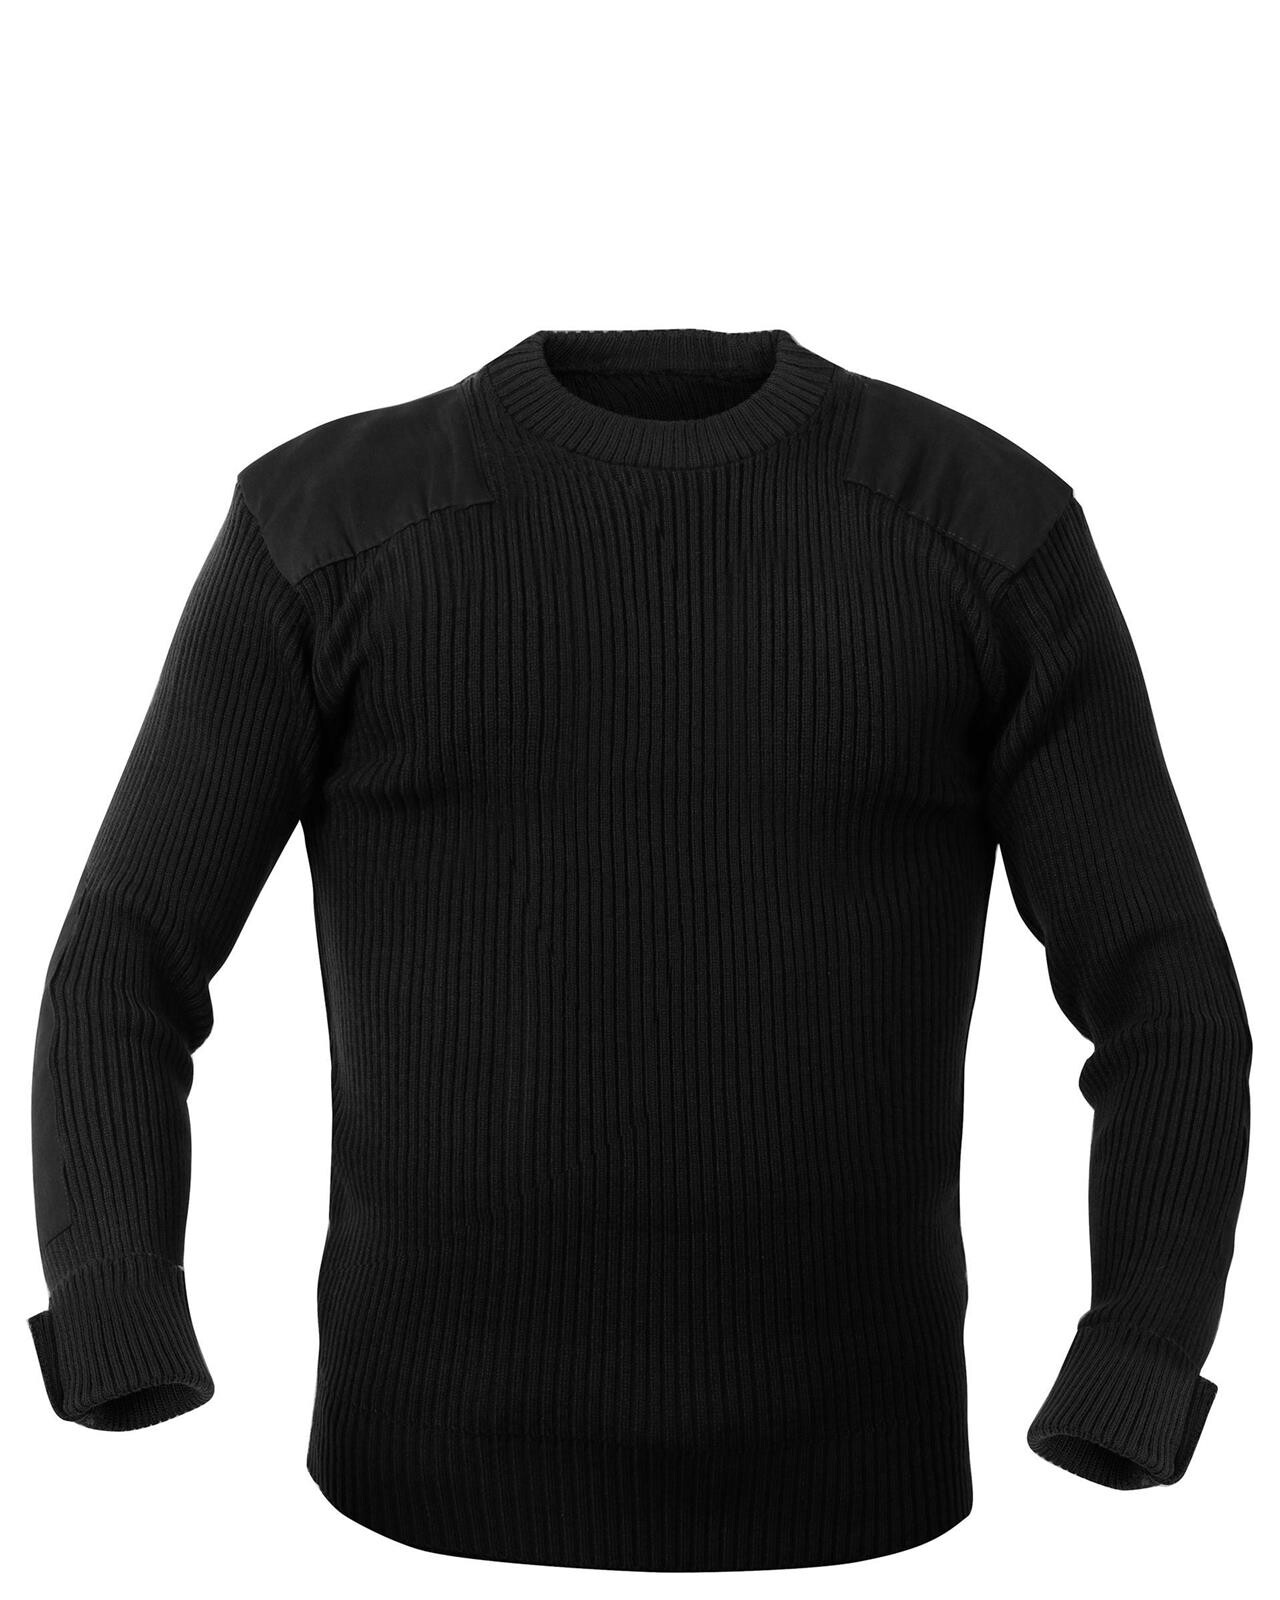 #2 - Rothco Commando Sweater - G.I. Style (Sort, 5XL)